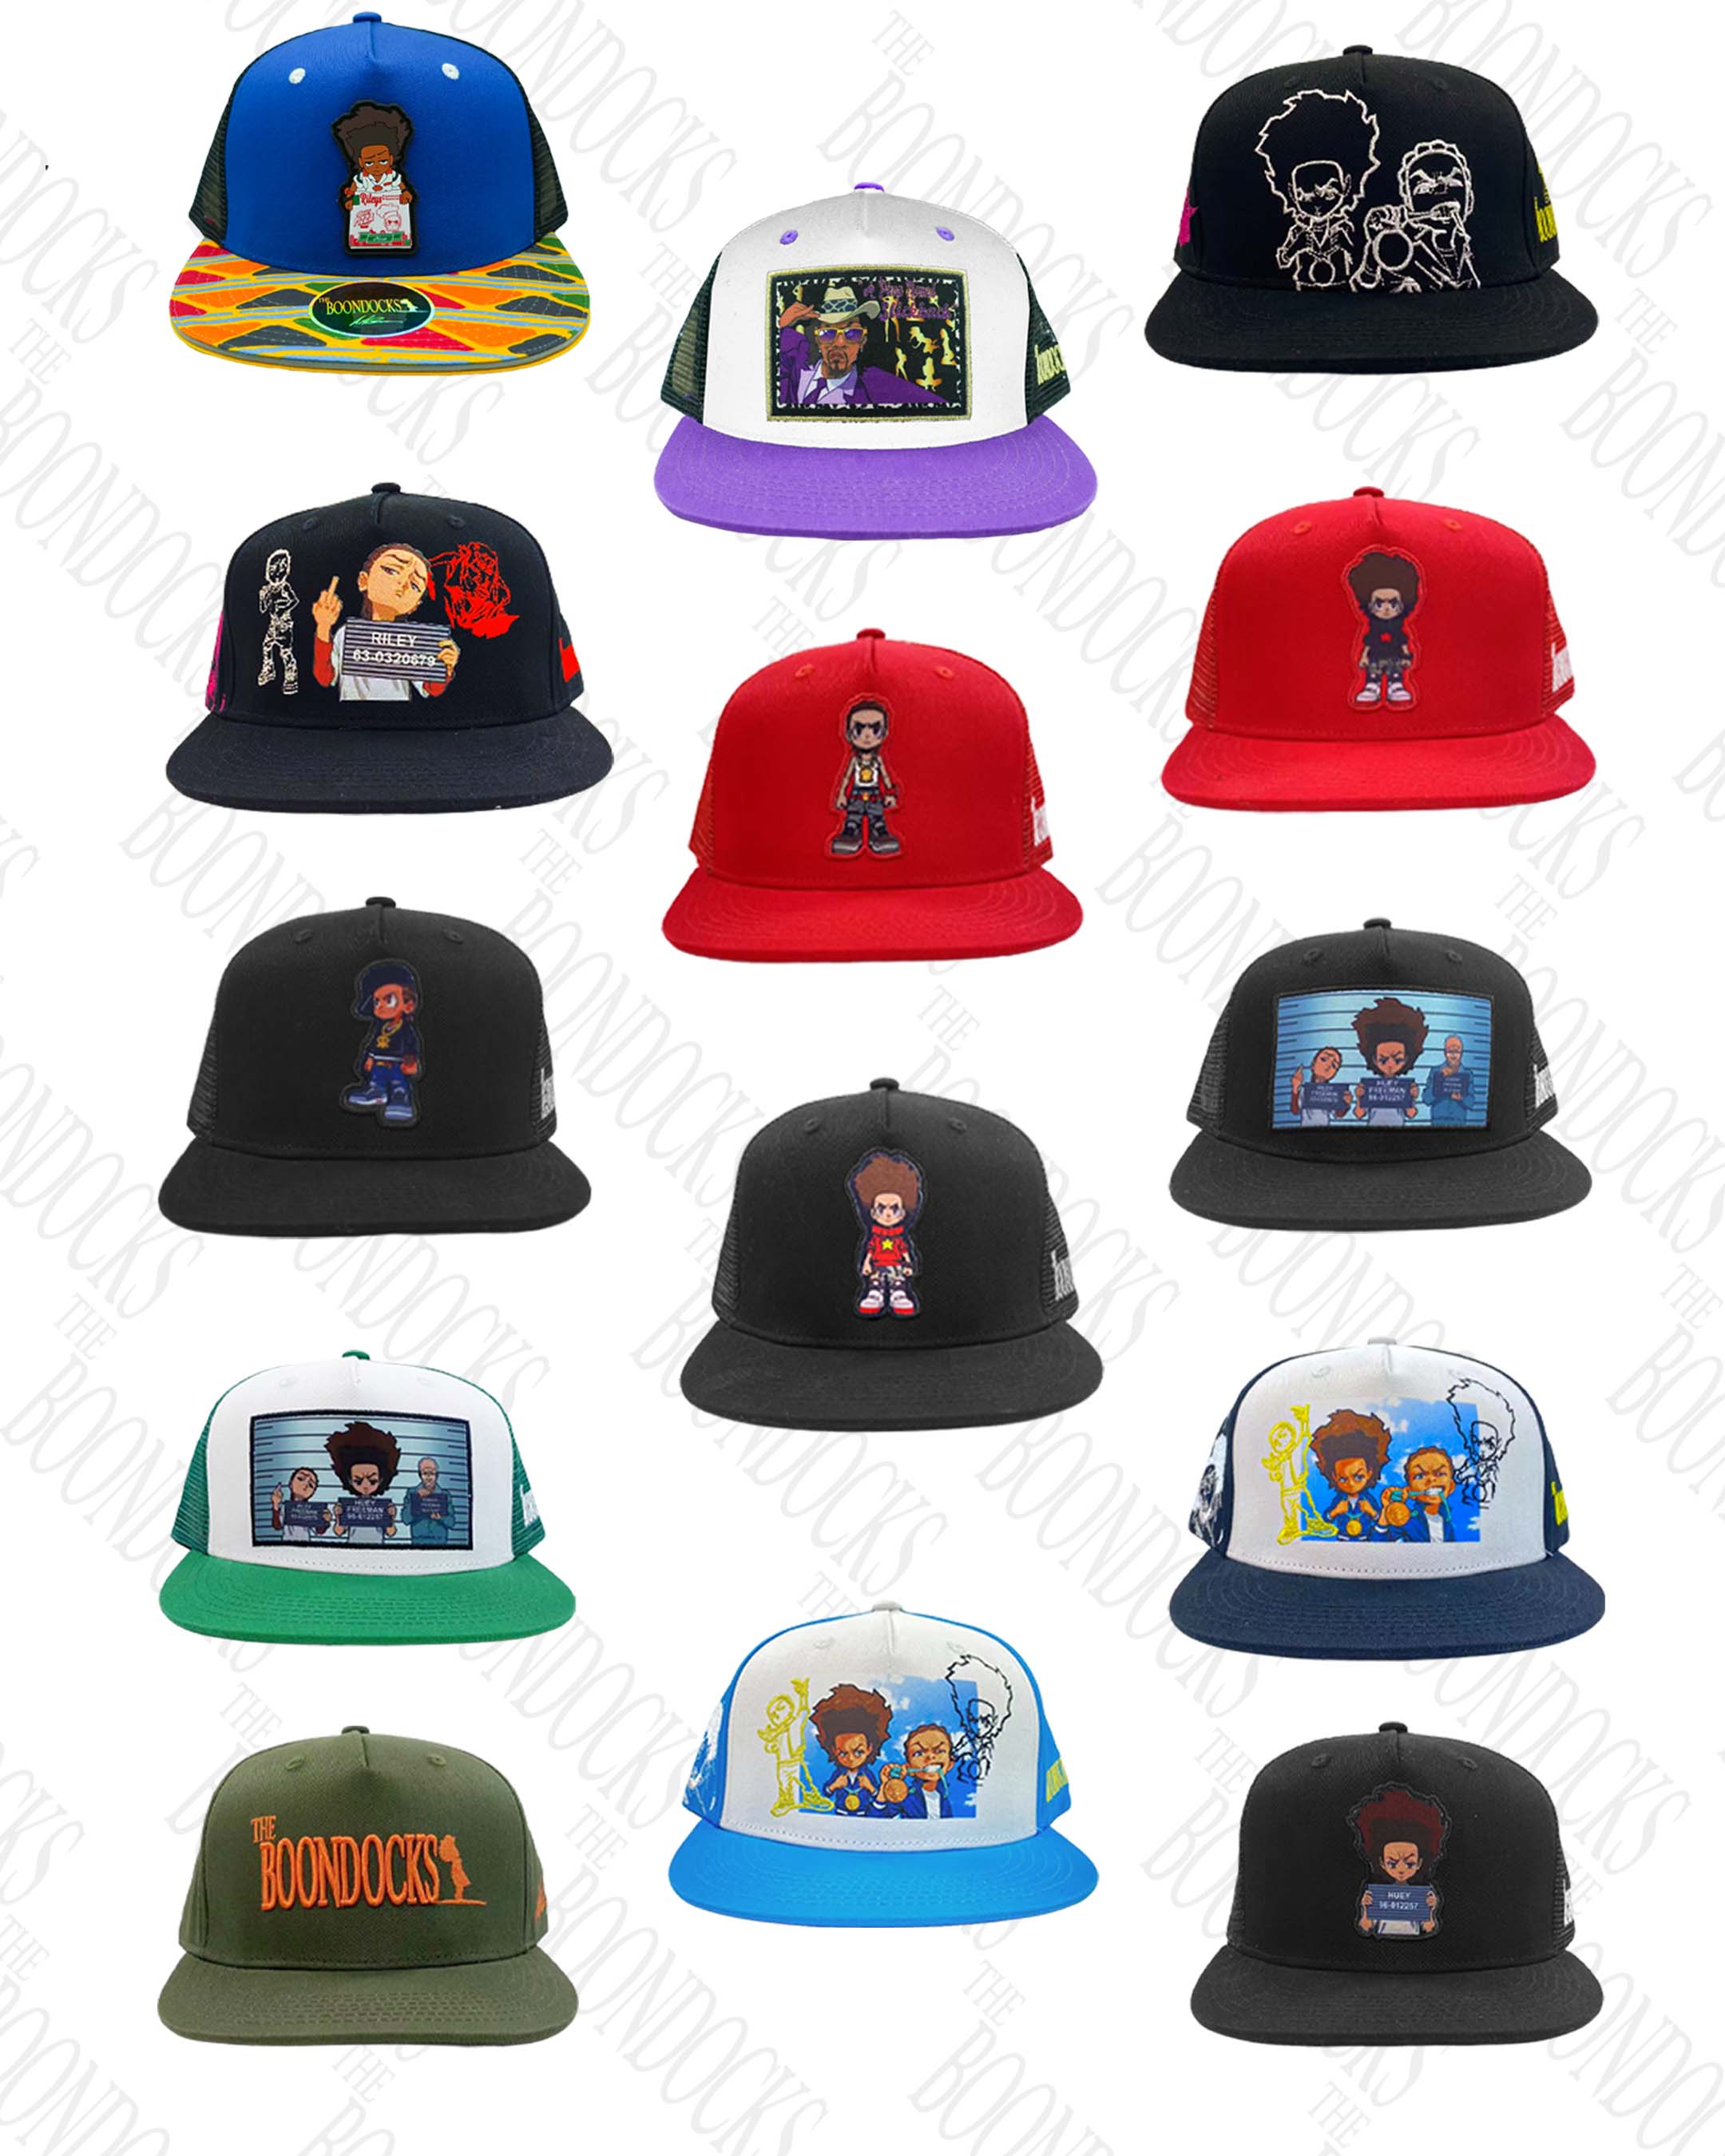 The Boondocks Hats